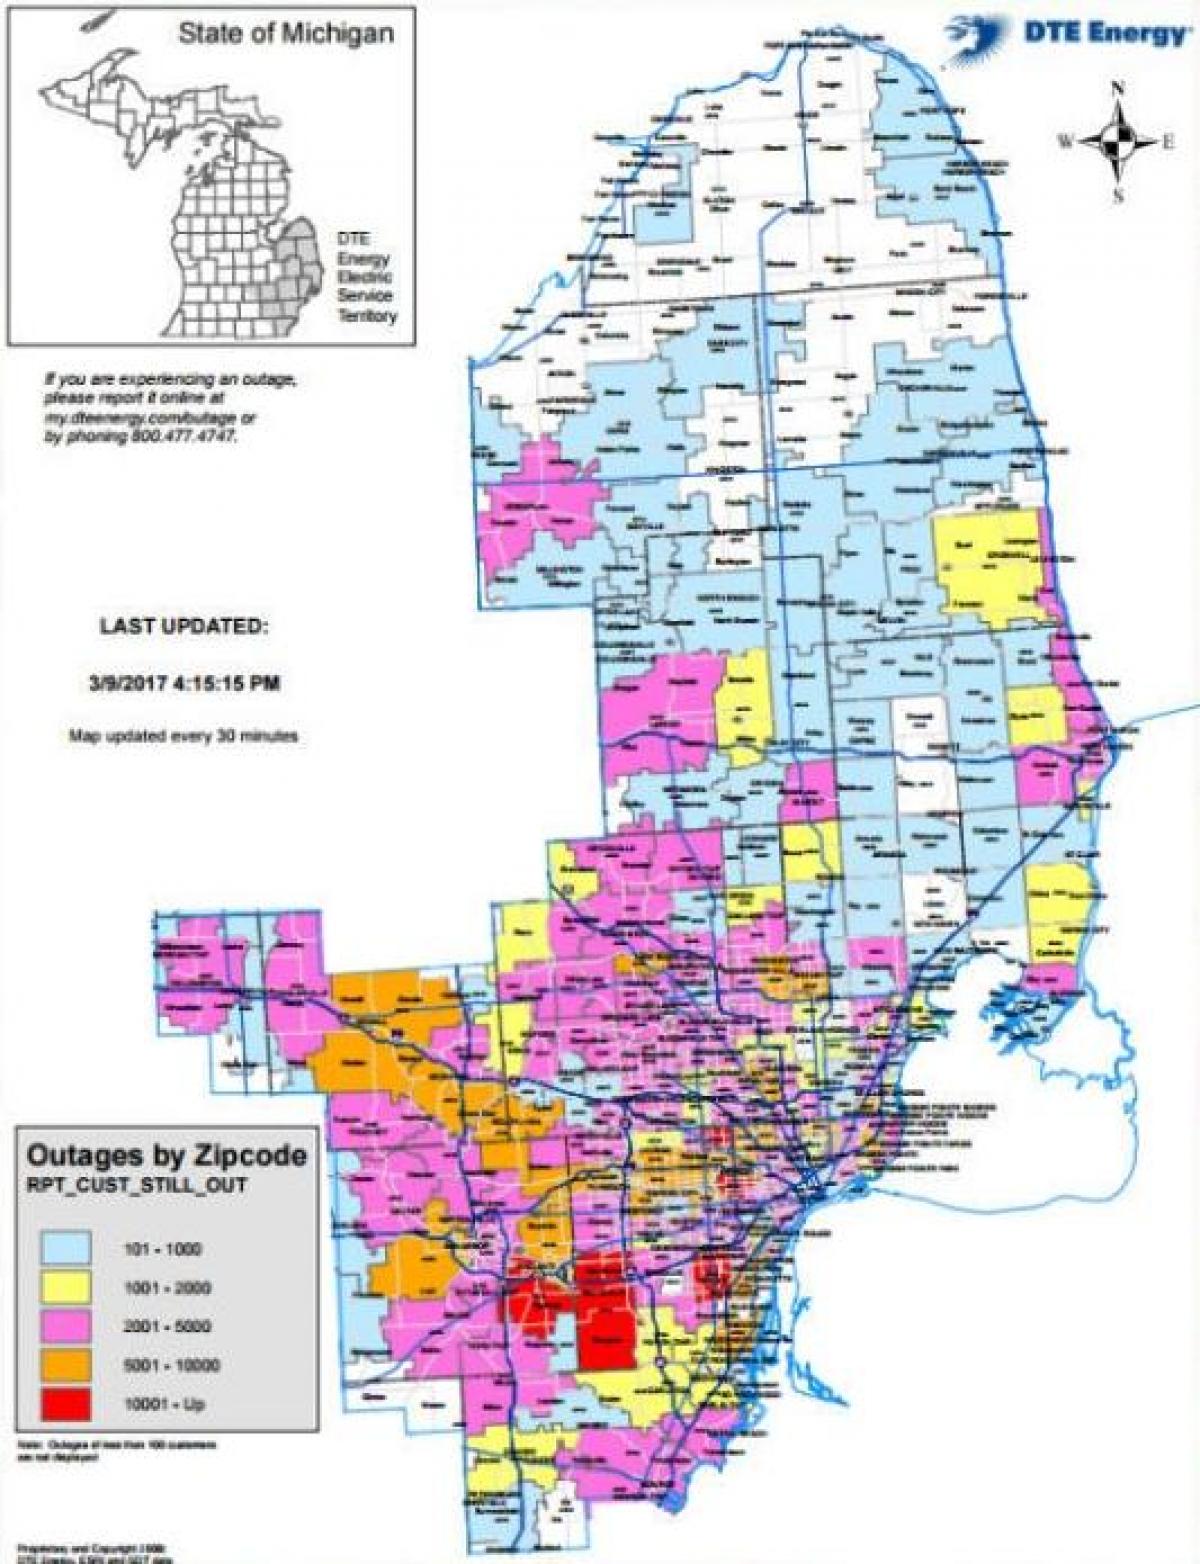 Detroit edison stroomstoring kaart